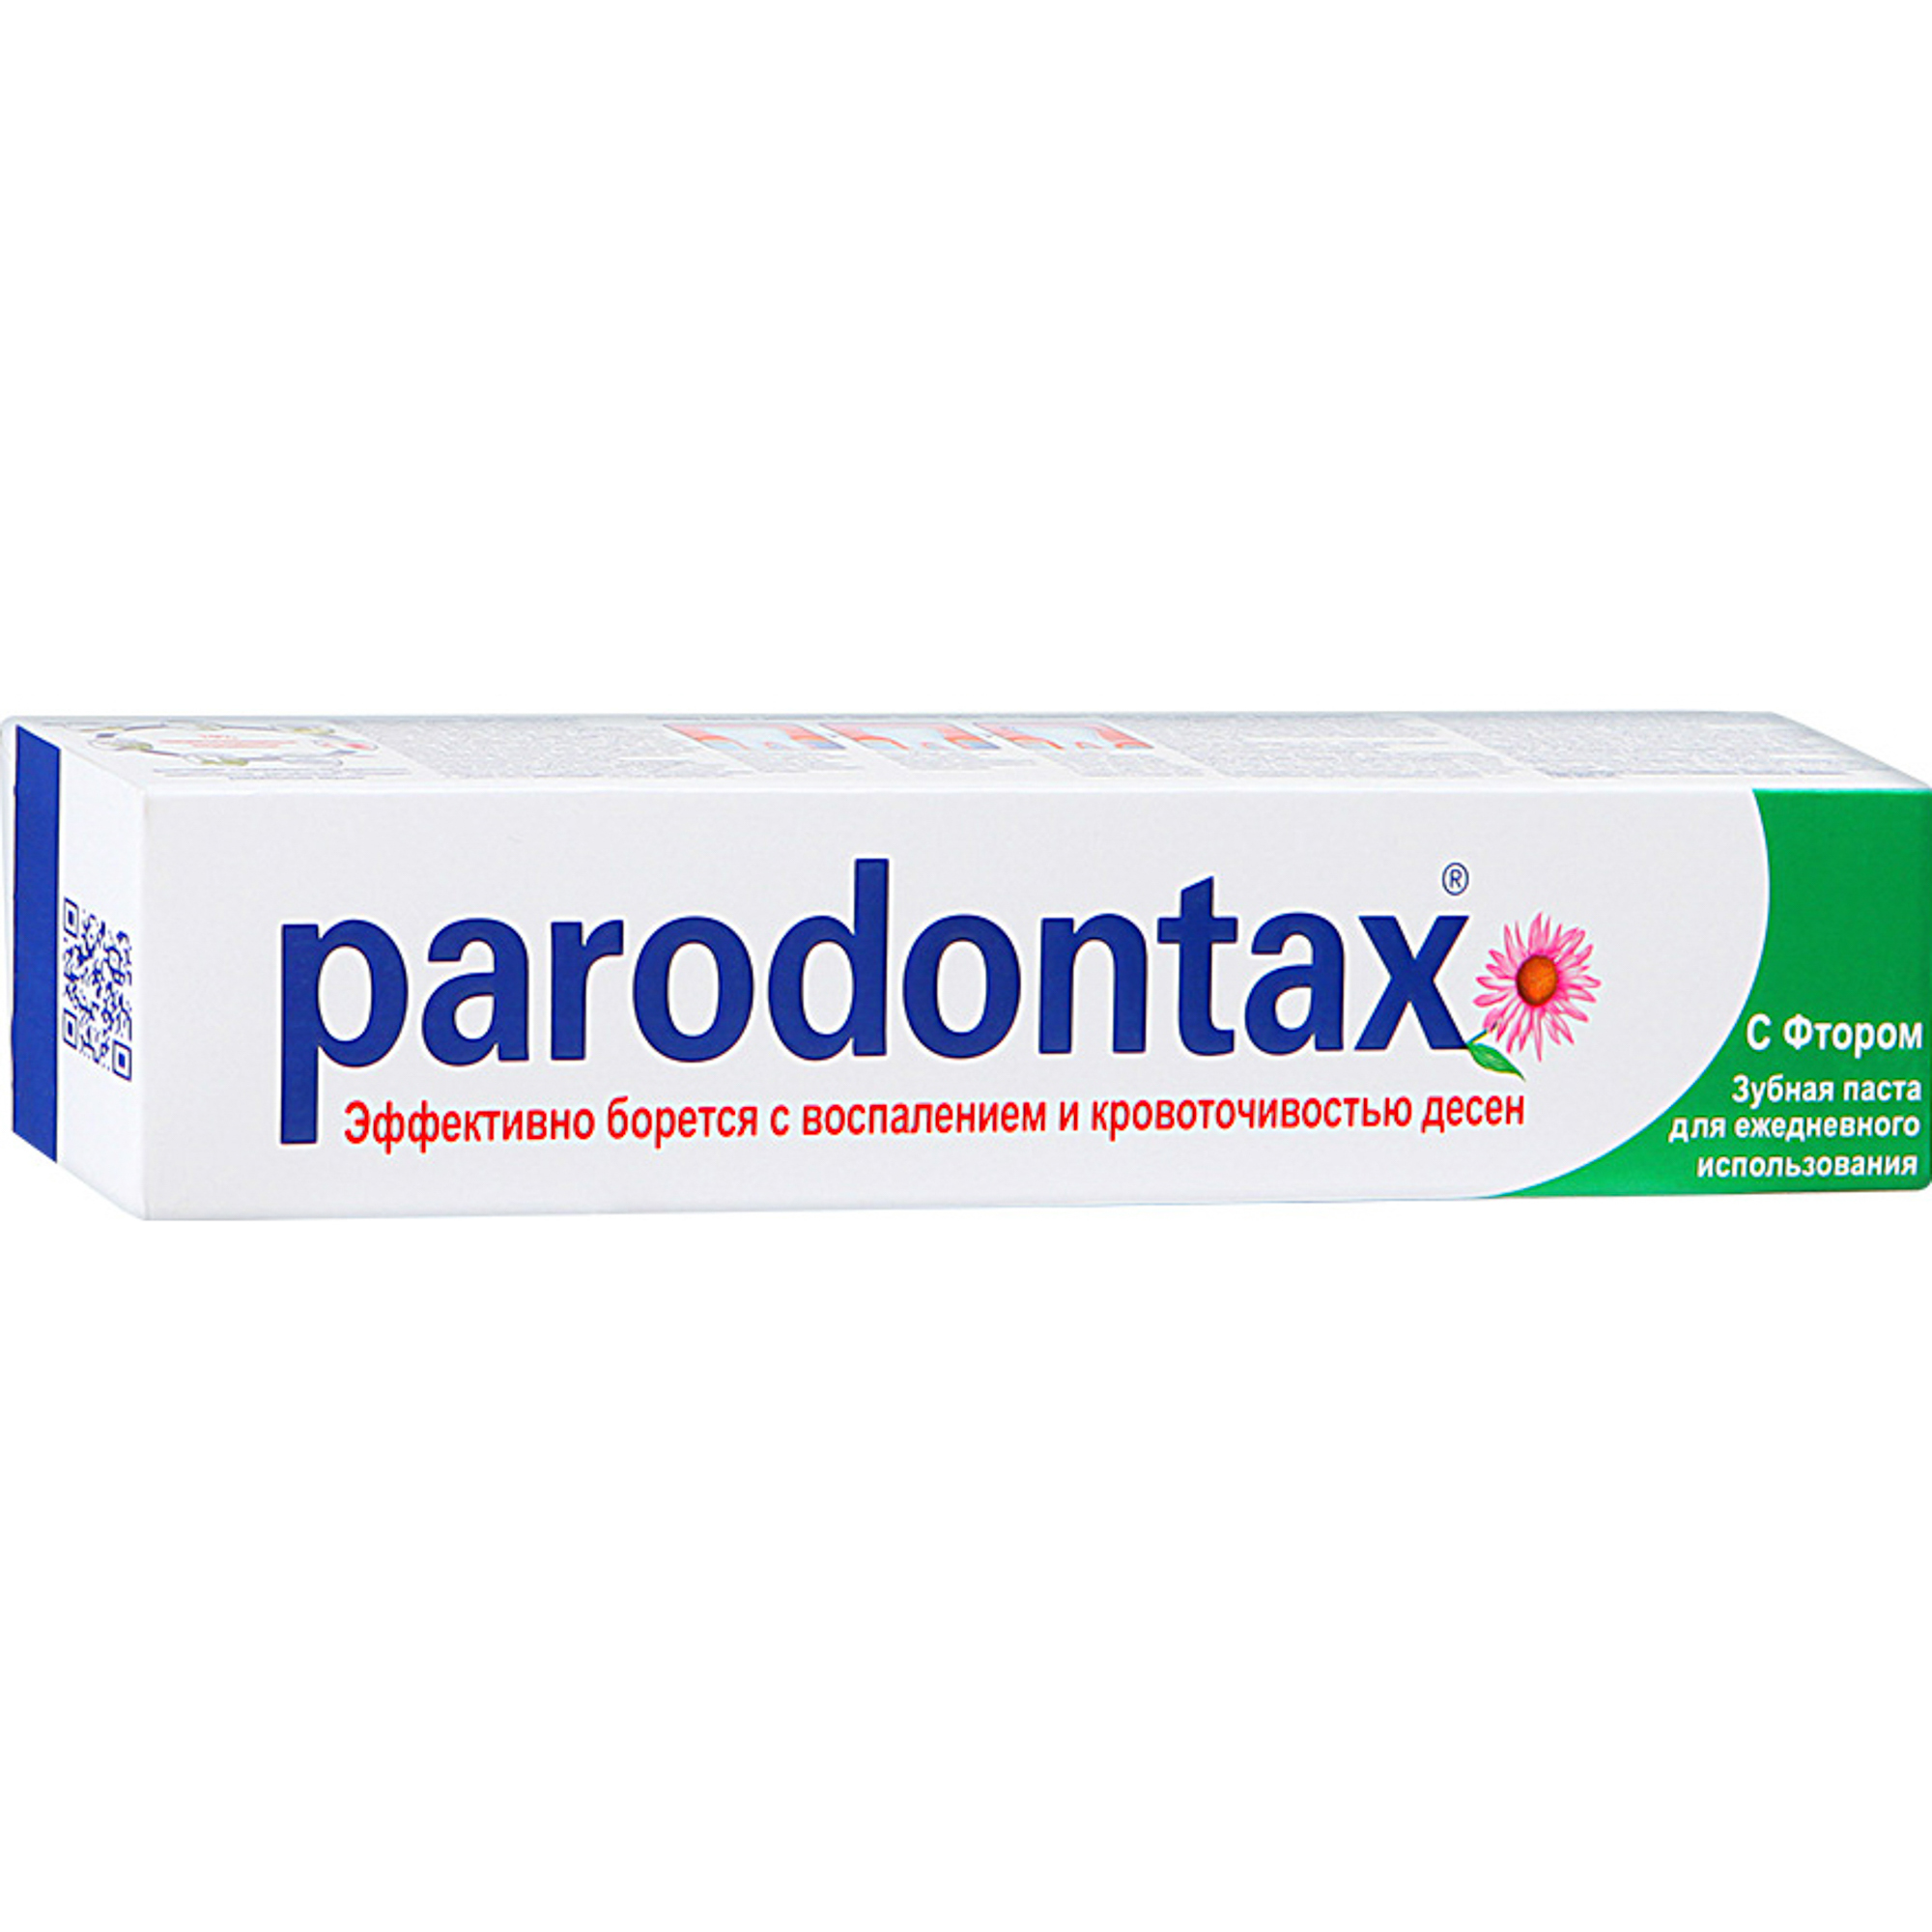 Зубная паста Parodontax С фтором 50 мл